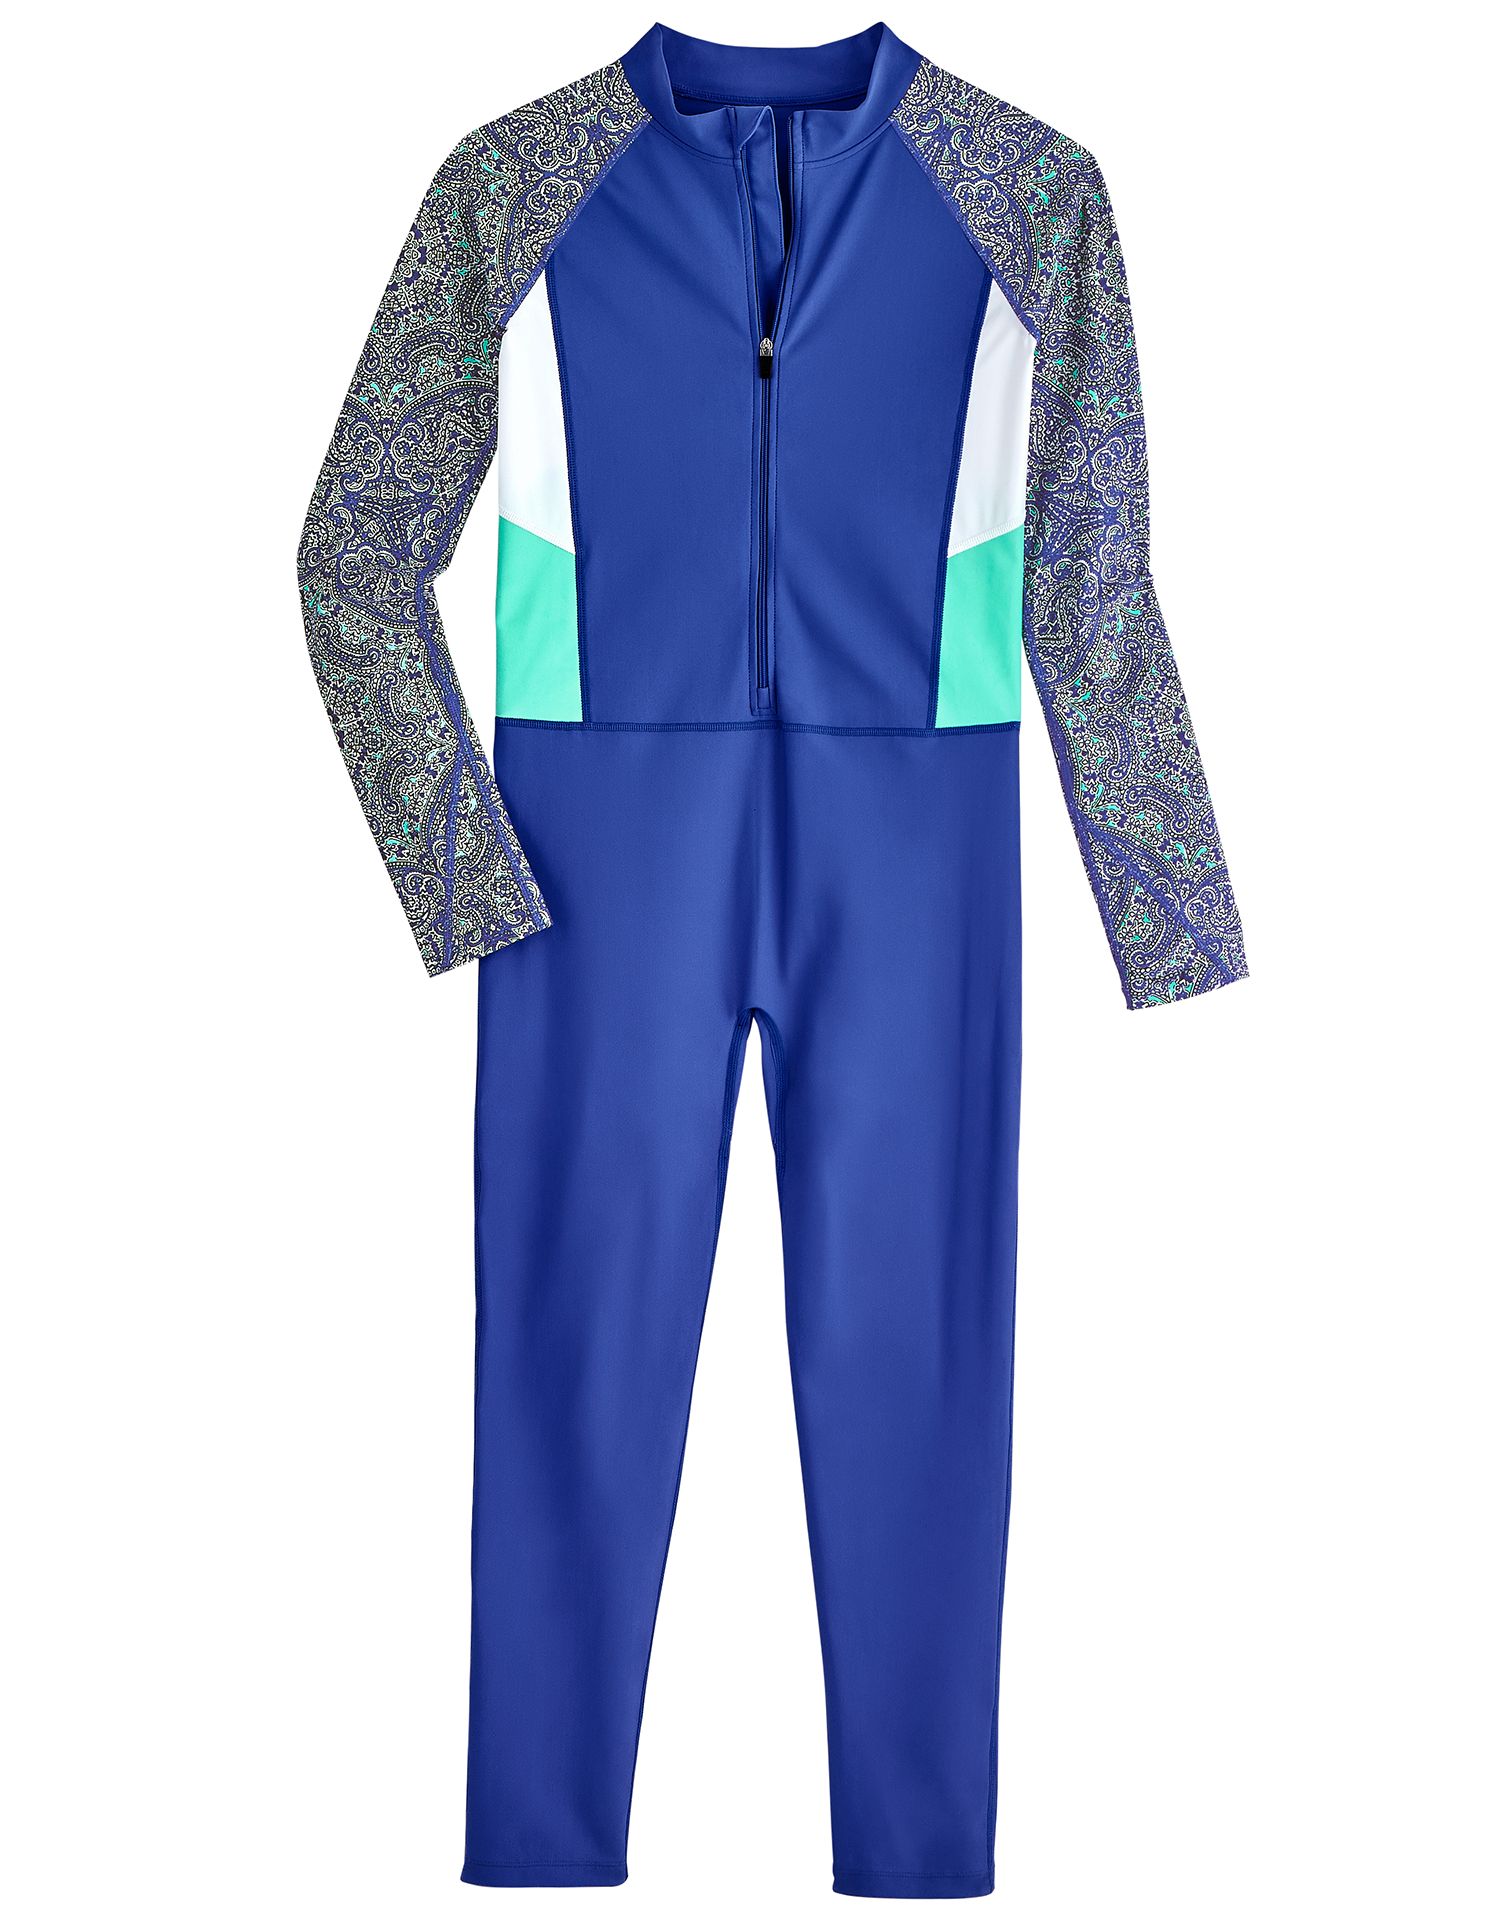 Coolibar - UV Swim suit for kids - Sunray 360 Coverage - Baja Blue